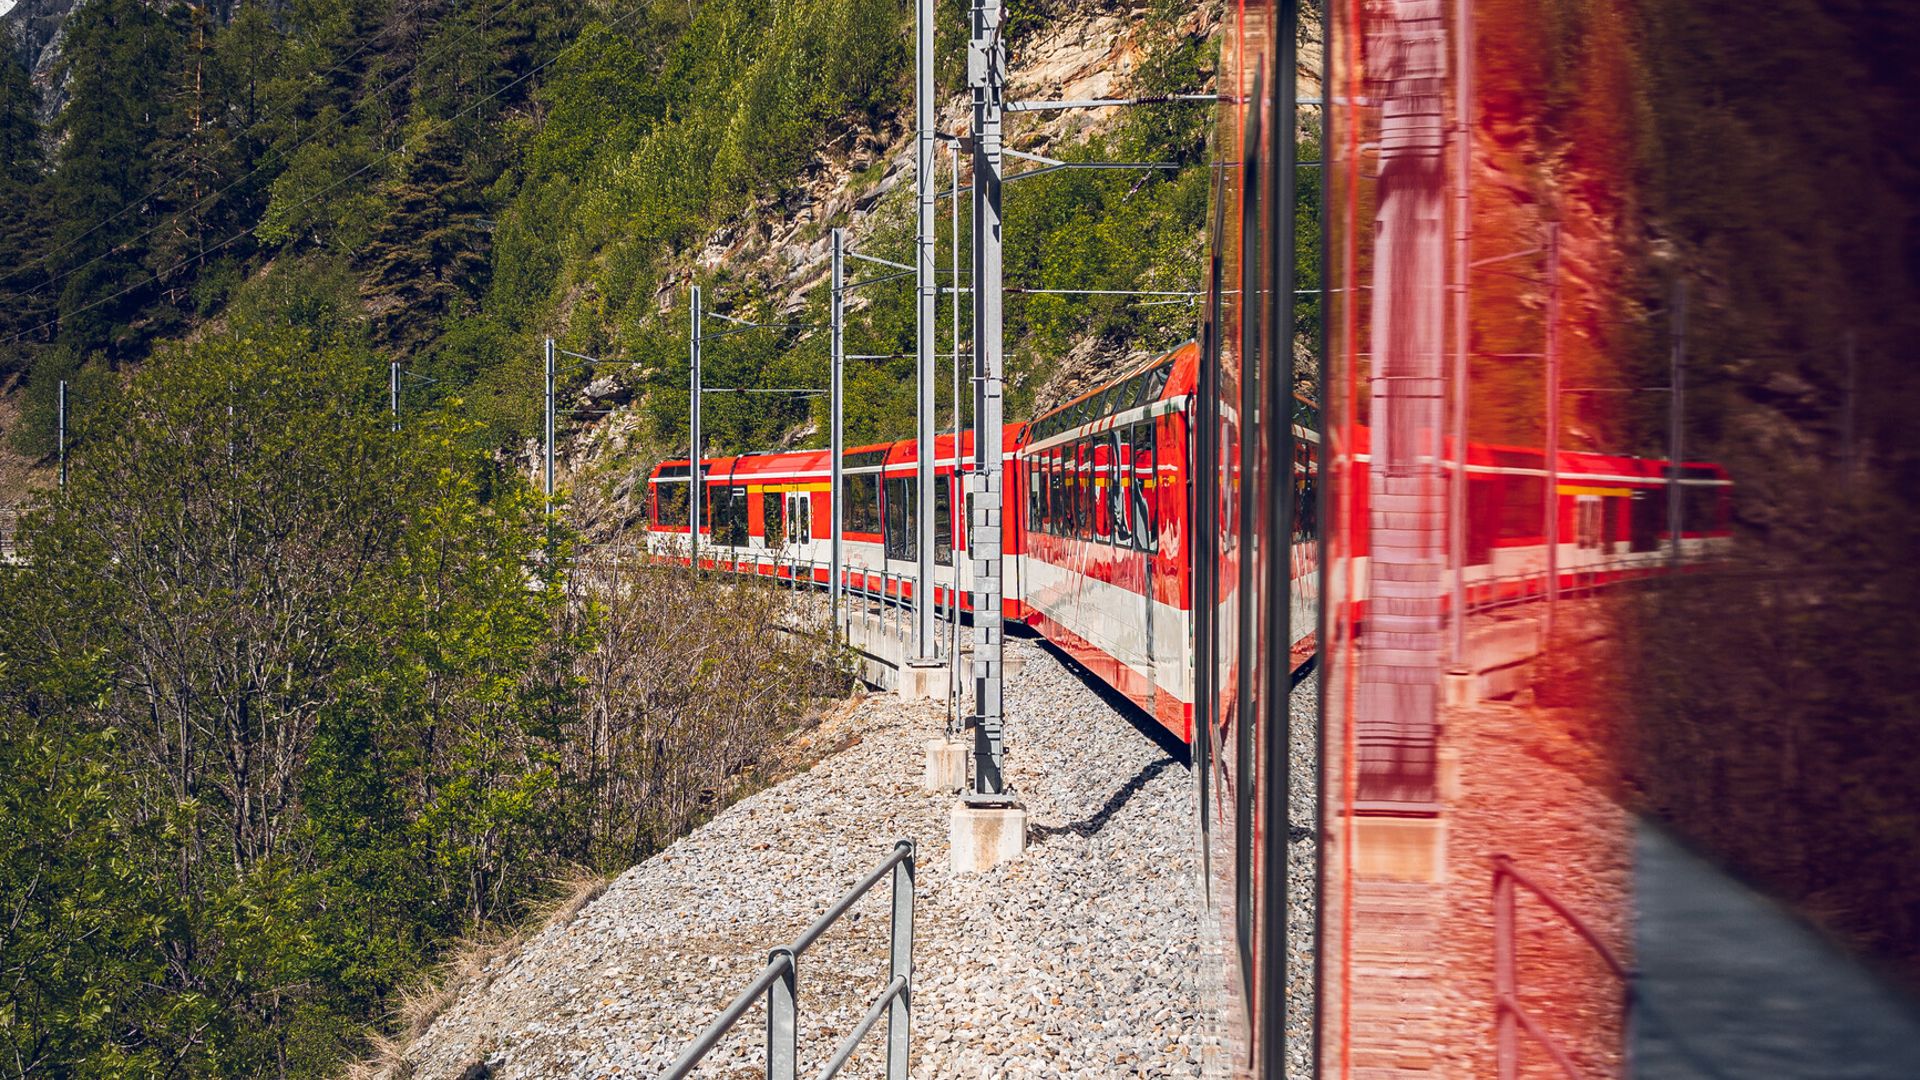 Matterhorn Gotthard Railway on the way to Zermatt in summer 